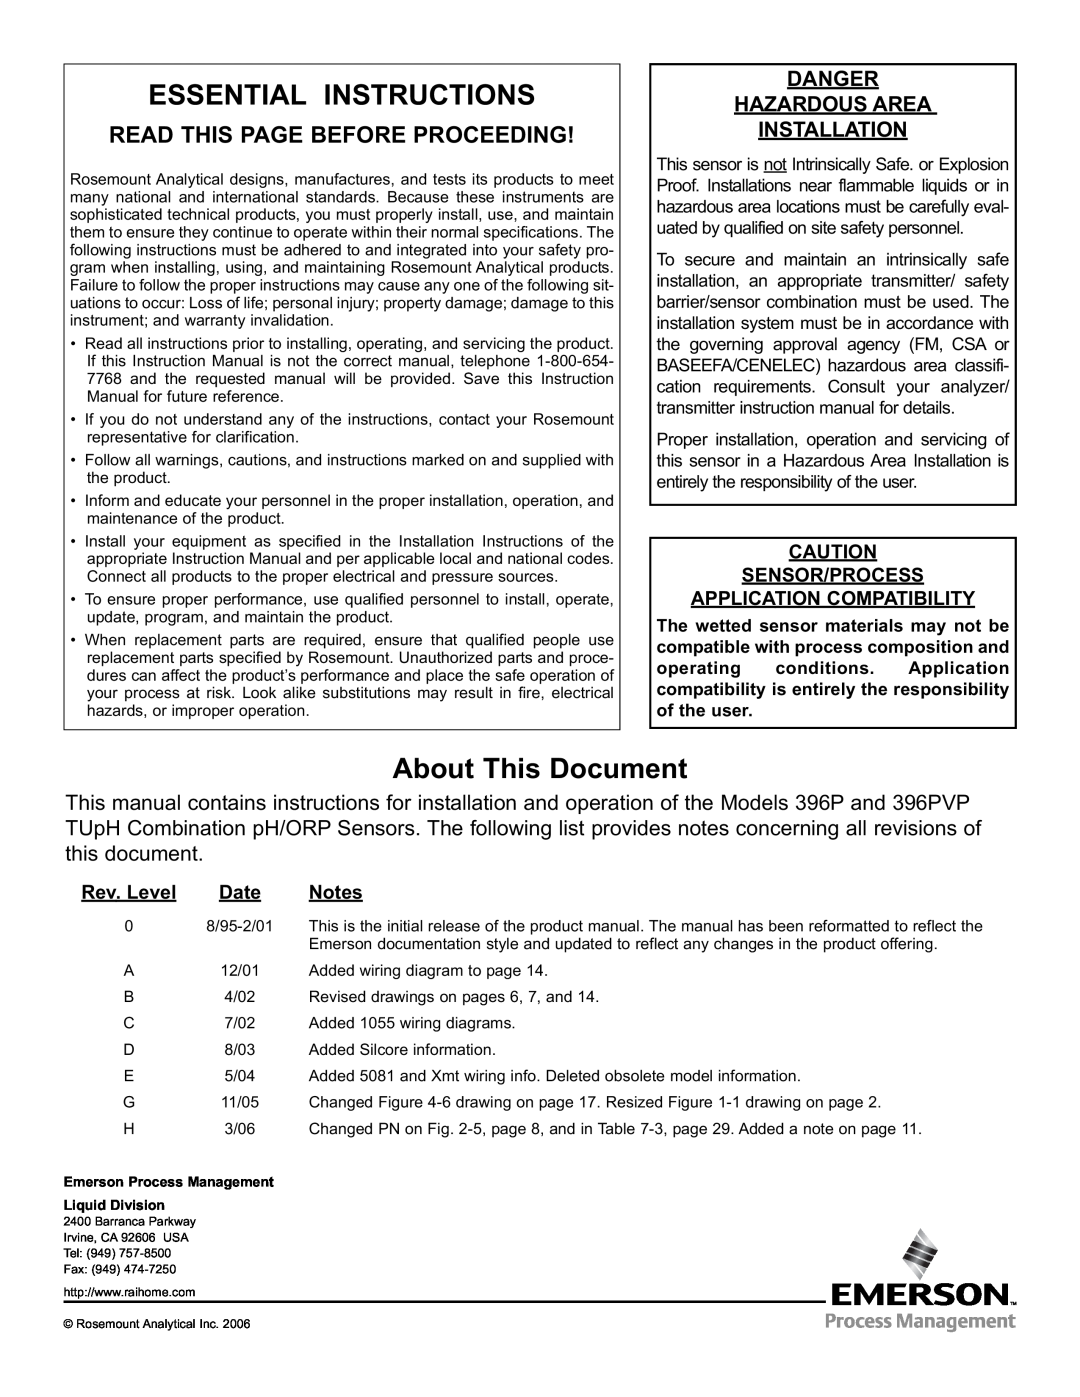 Emerson Process Management 396PVP Essential Instructions, About This Document, Danger Hazardous Area Installation, Date 